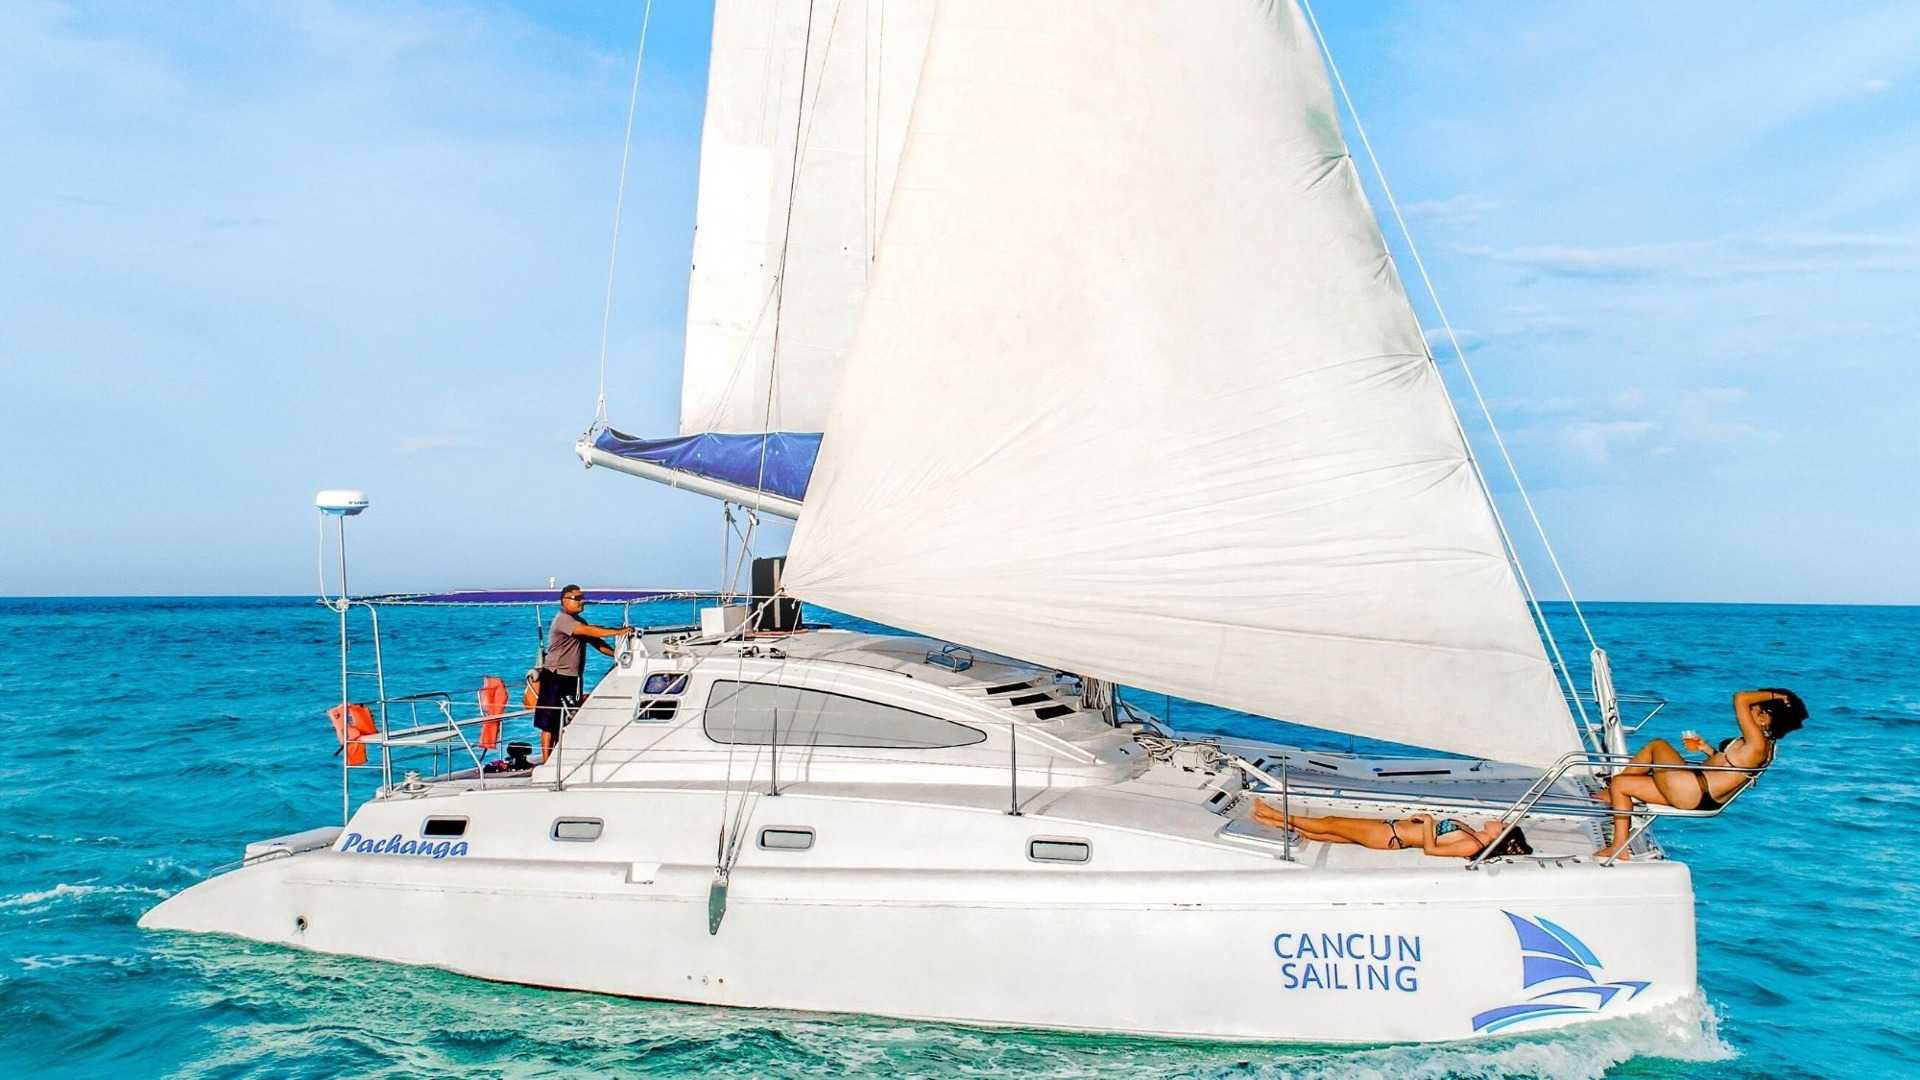 1 - LowRes - Pachanga - Private Isla Mujeres catamaran tour - Cancun Sailing